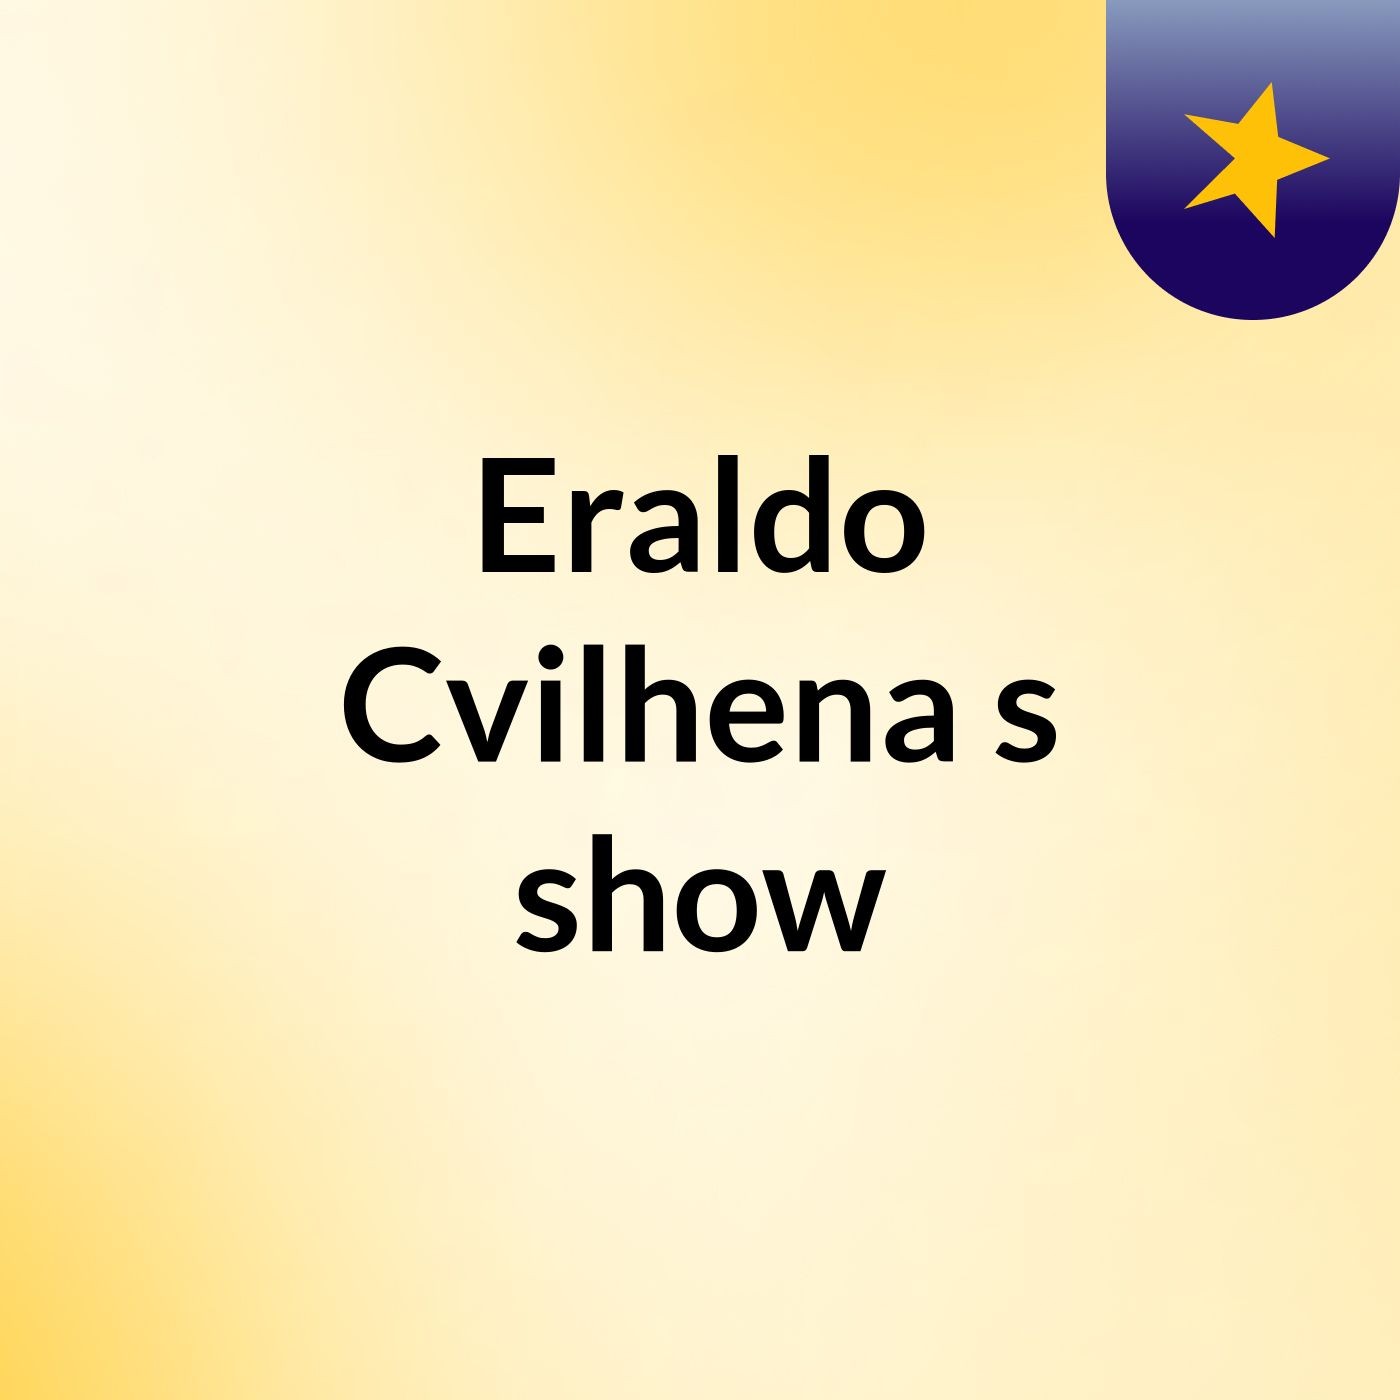 Eraldo Cvilhena's show